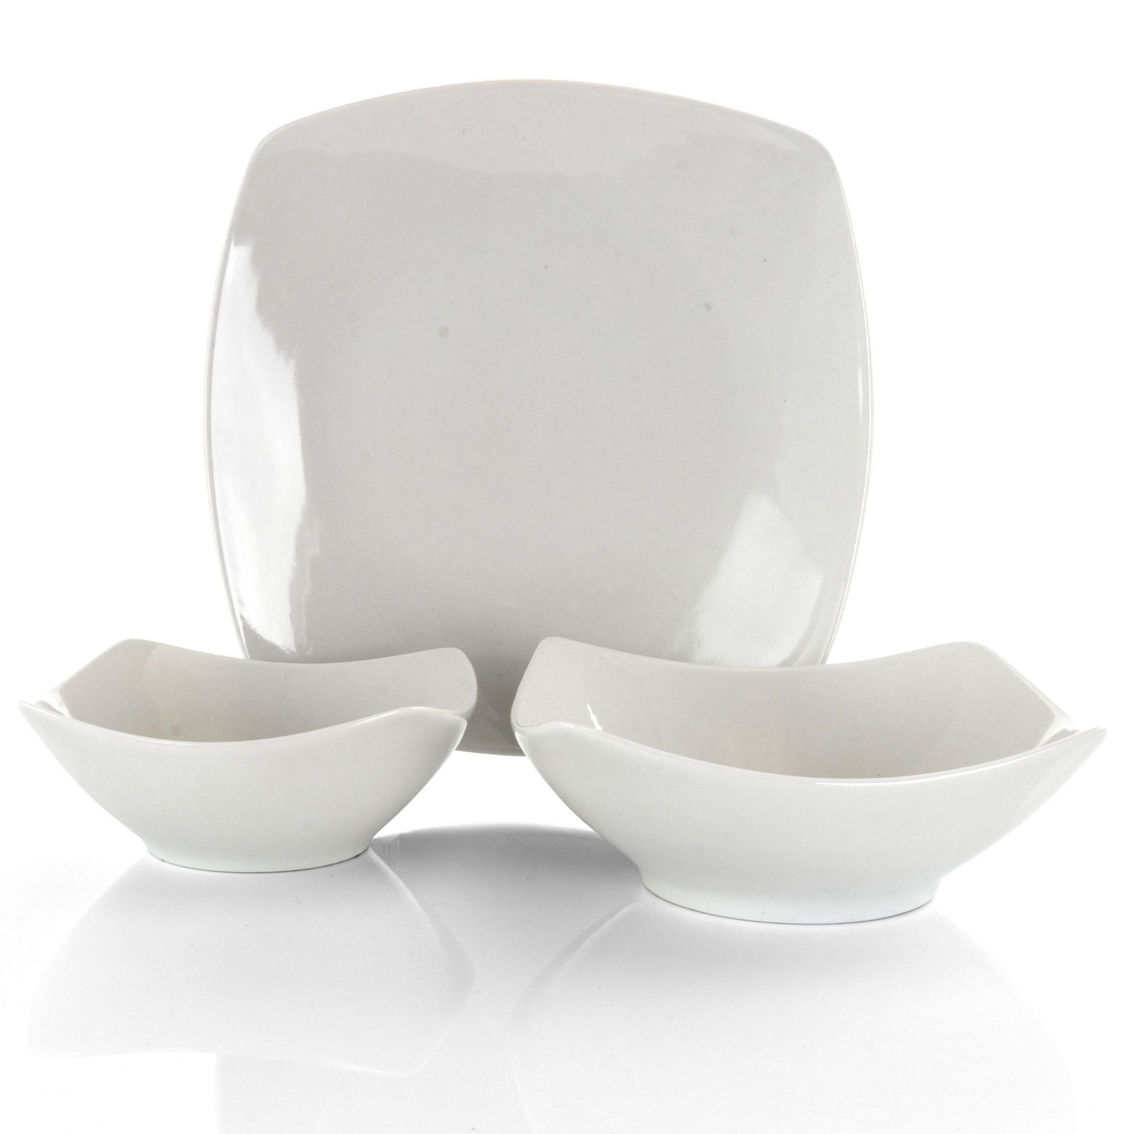 Gibson All U Need 48 Piece Ceramic Dinnerware Combo Set in White - Image 4 of 5